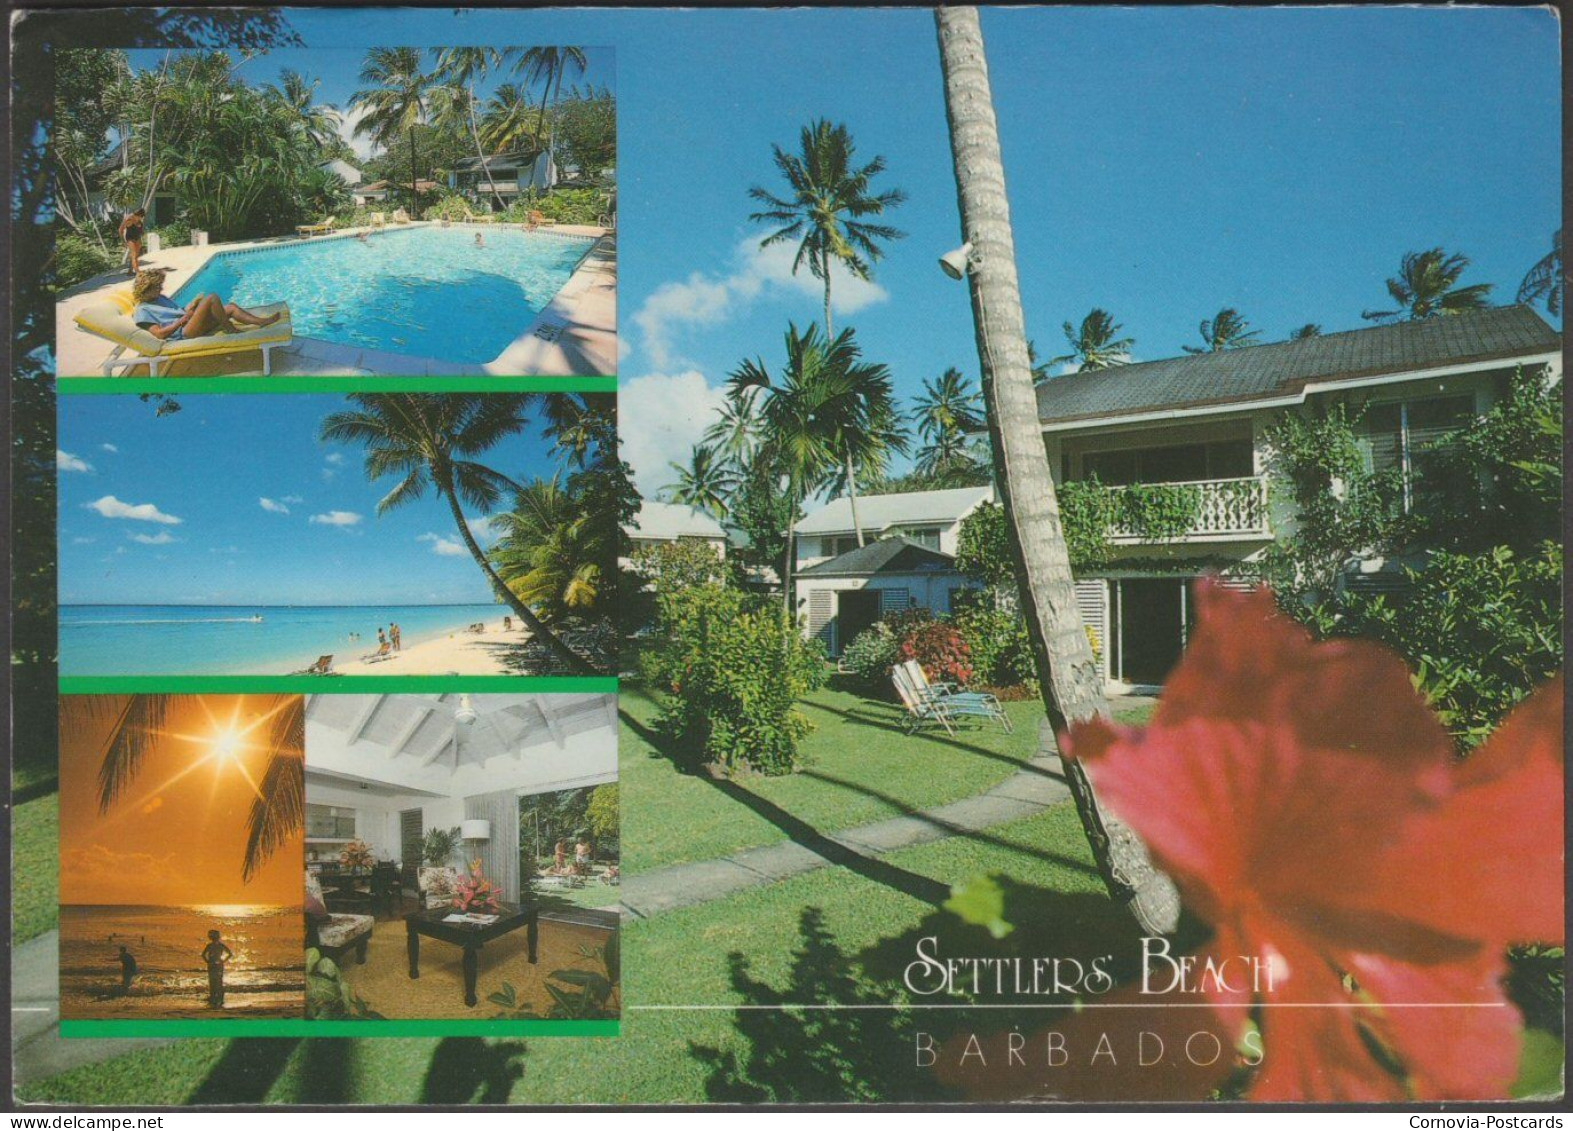 Settlers' Beach, Barbados, 1991 - Multi-Media Productions Postcard - Barbados